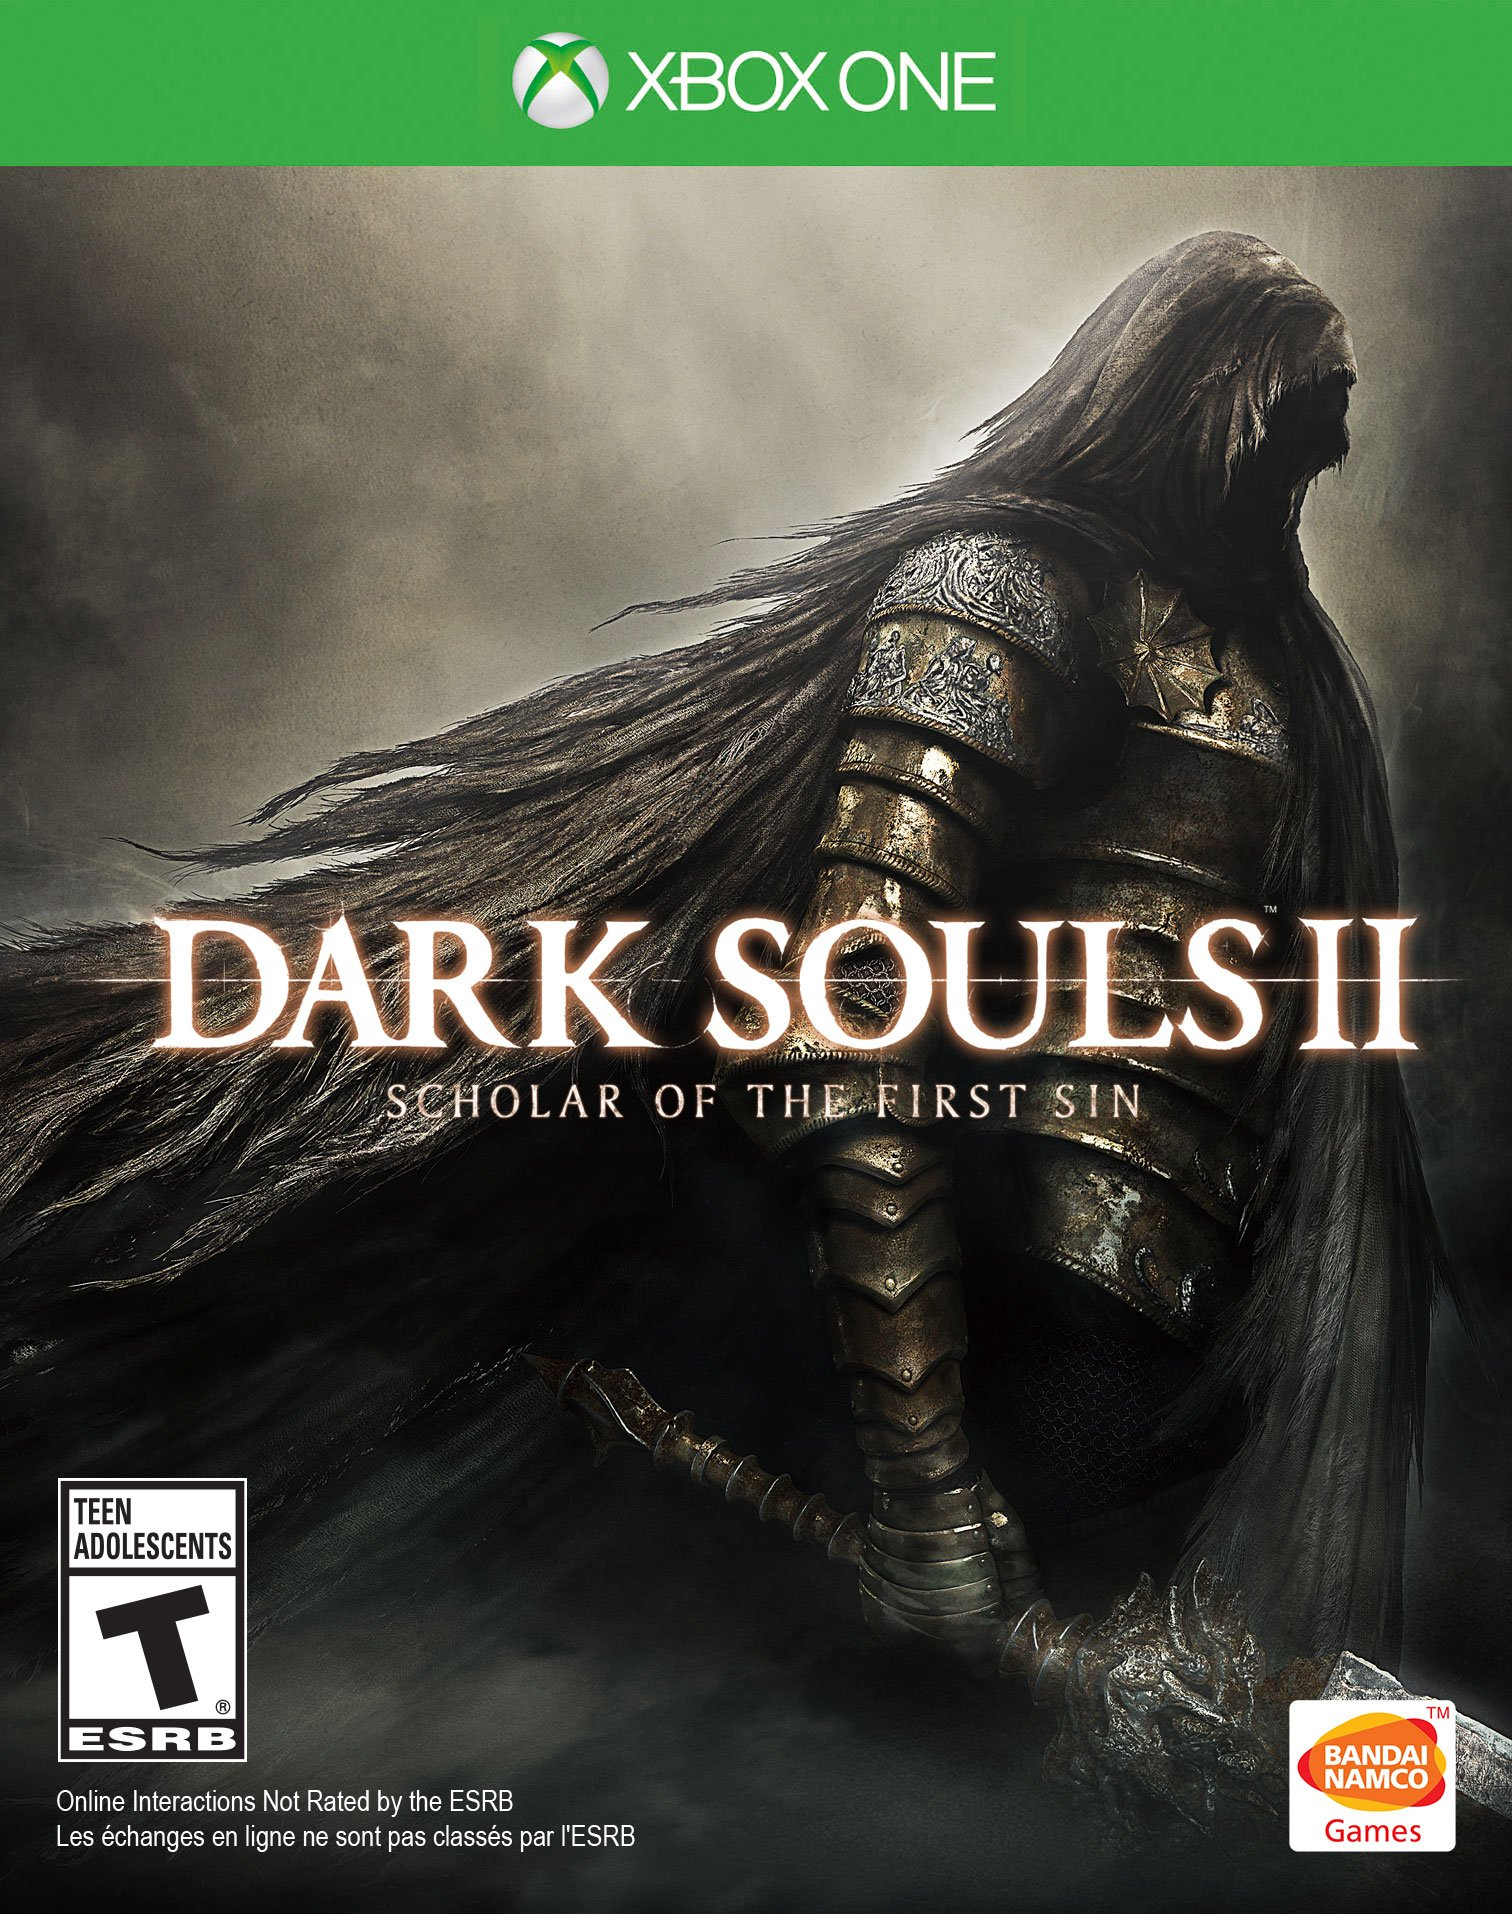 Игра DARK SOULS II: Scholar of the First Sin для Xbox One/Series X|S (Турция), русский перевод, электронный ключ